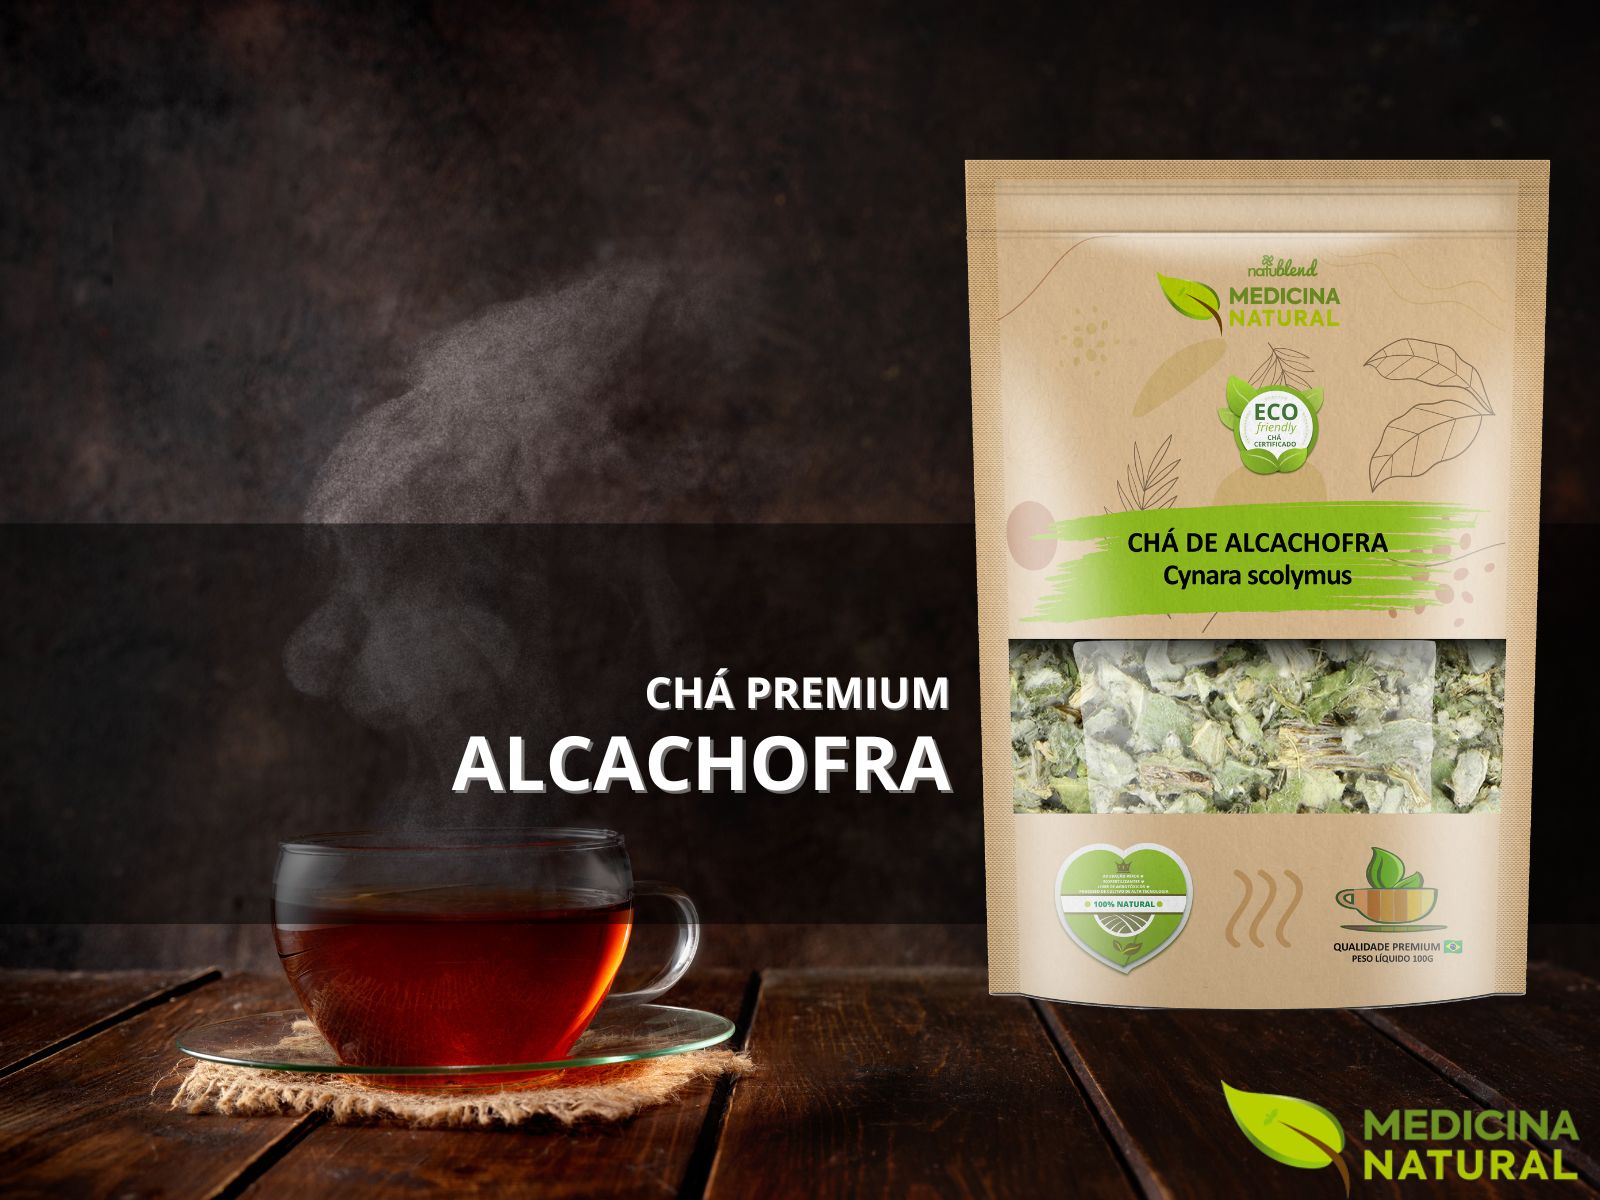 Chá de Alcachofra Medicina Natural